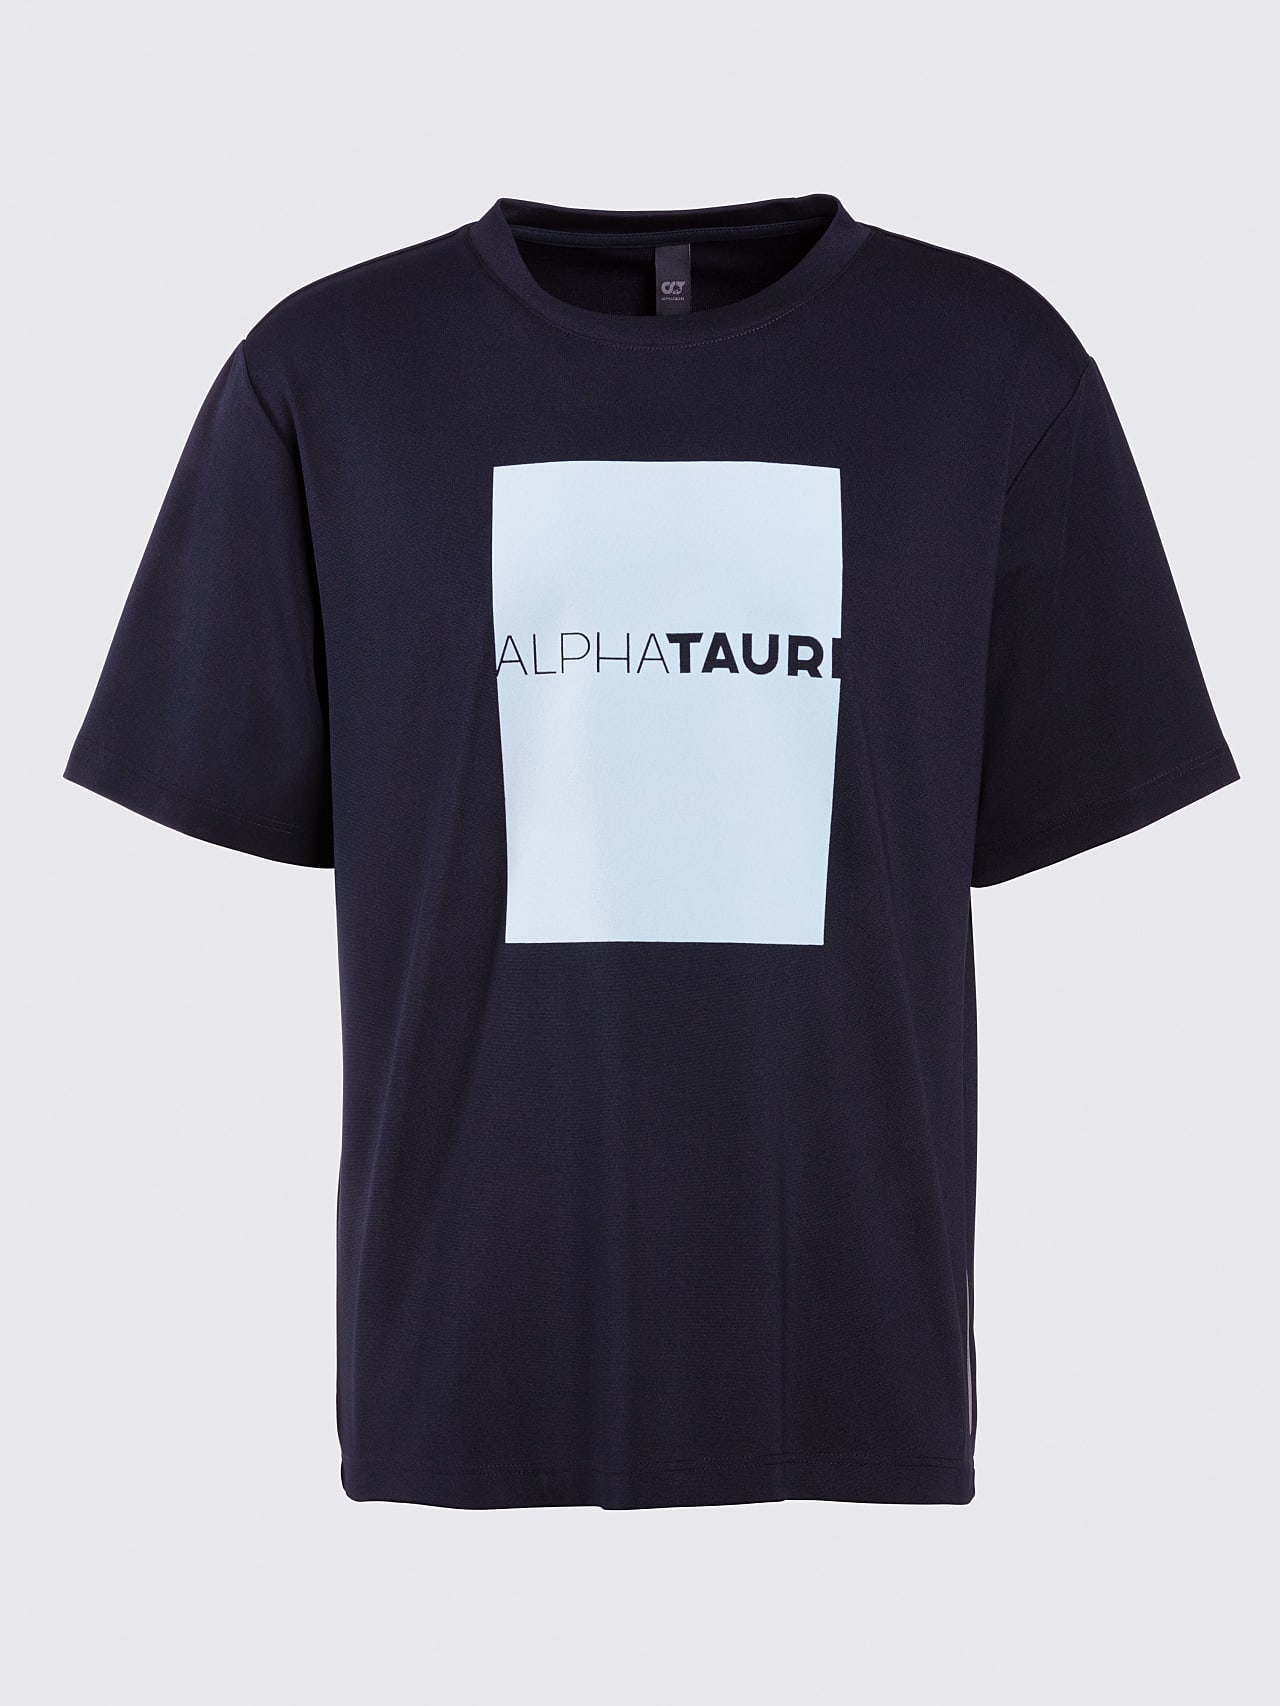 AlphaTauri | JAHEV V1.Y5.02 | Relaxed Logo T-Shirt in navy / blue for Men